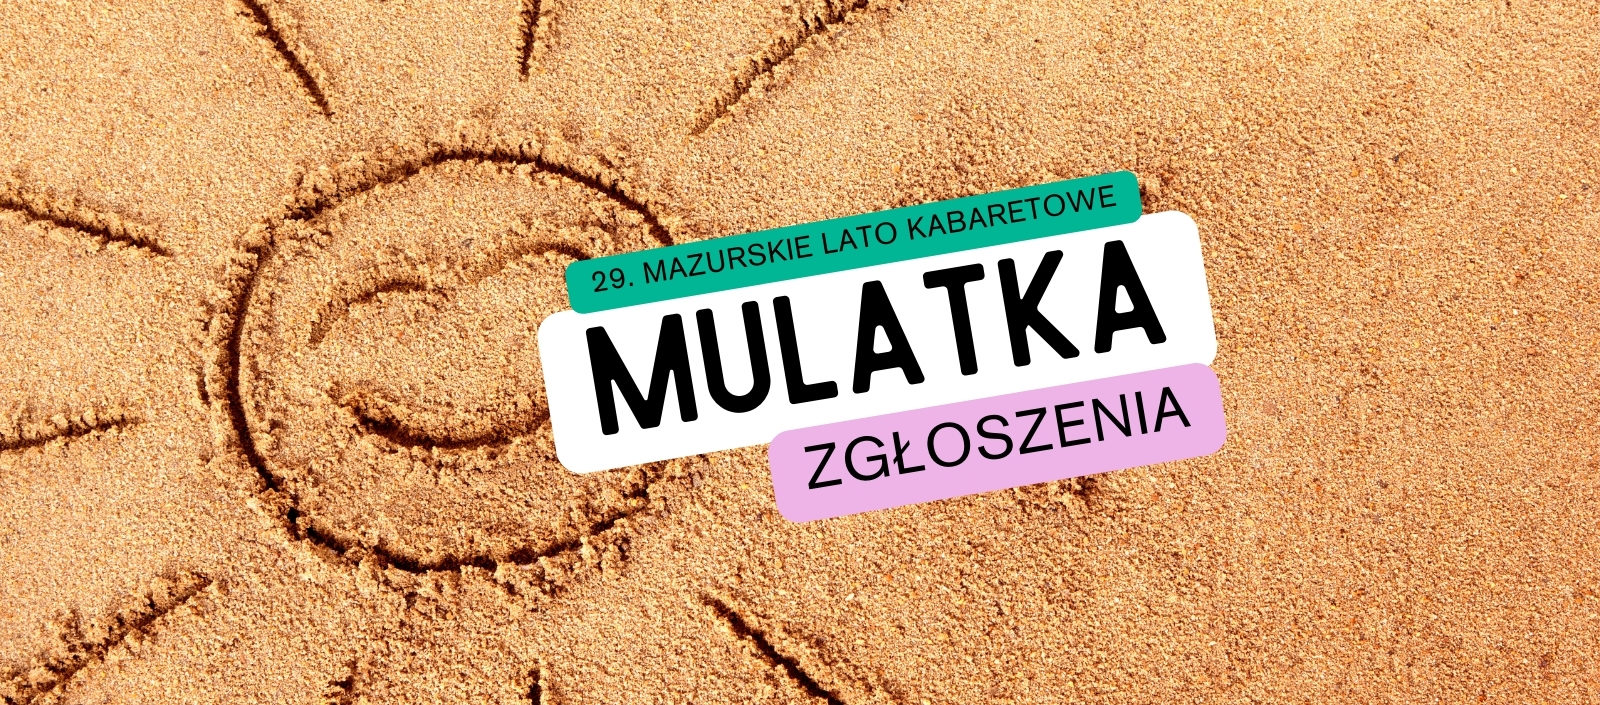 29. Mazurskie Lato Kabaretowe Zgłoszenia do konkursu o Grand Prix „Mulatki”